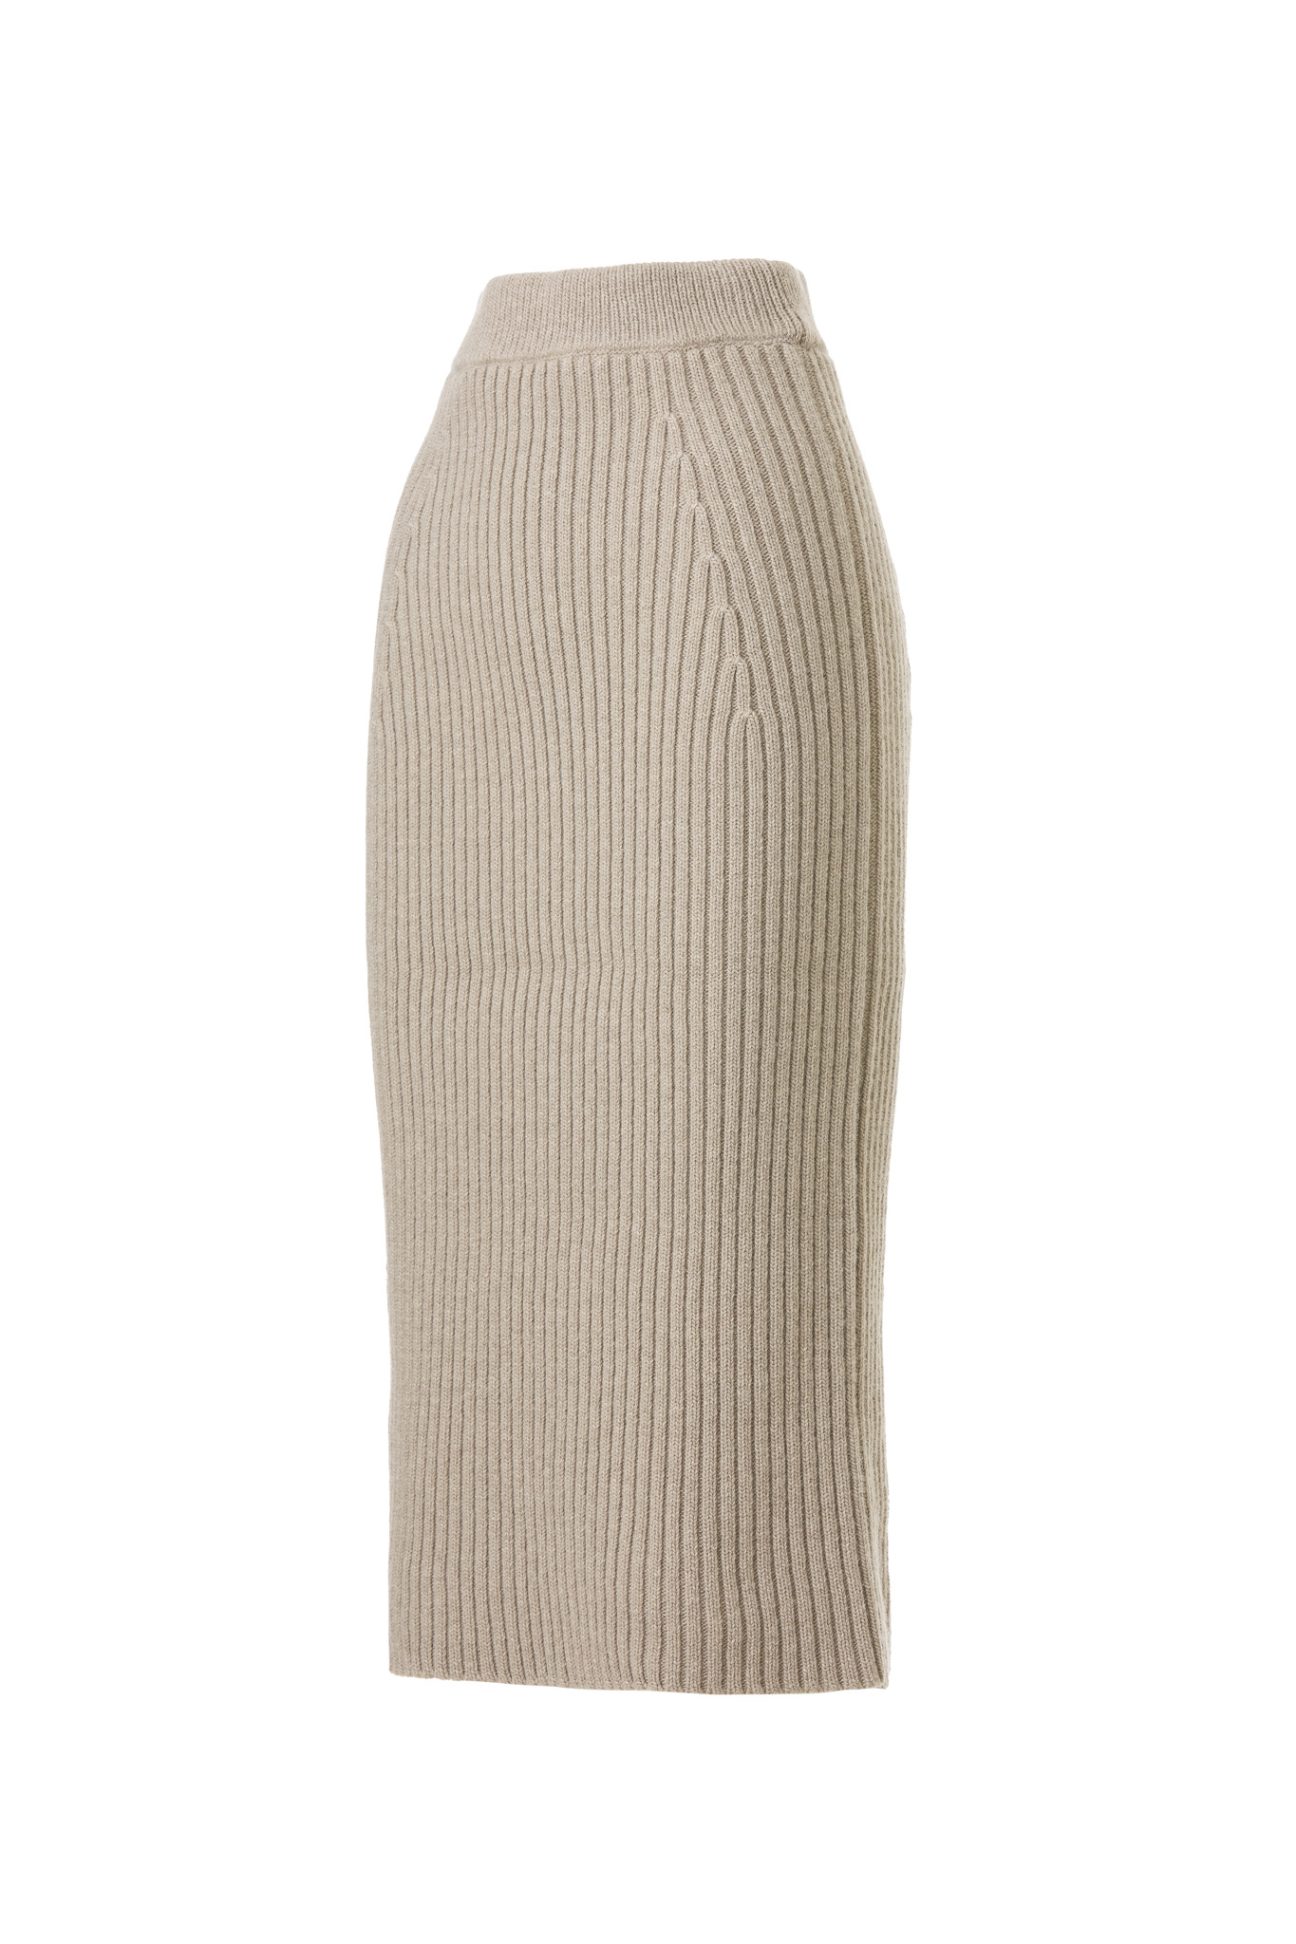 Knitted Ribbed Skirt, Ice Latte - AmiAmalia Luxury Knitwear